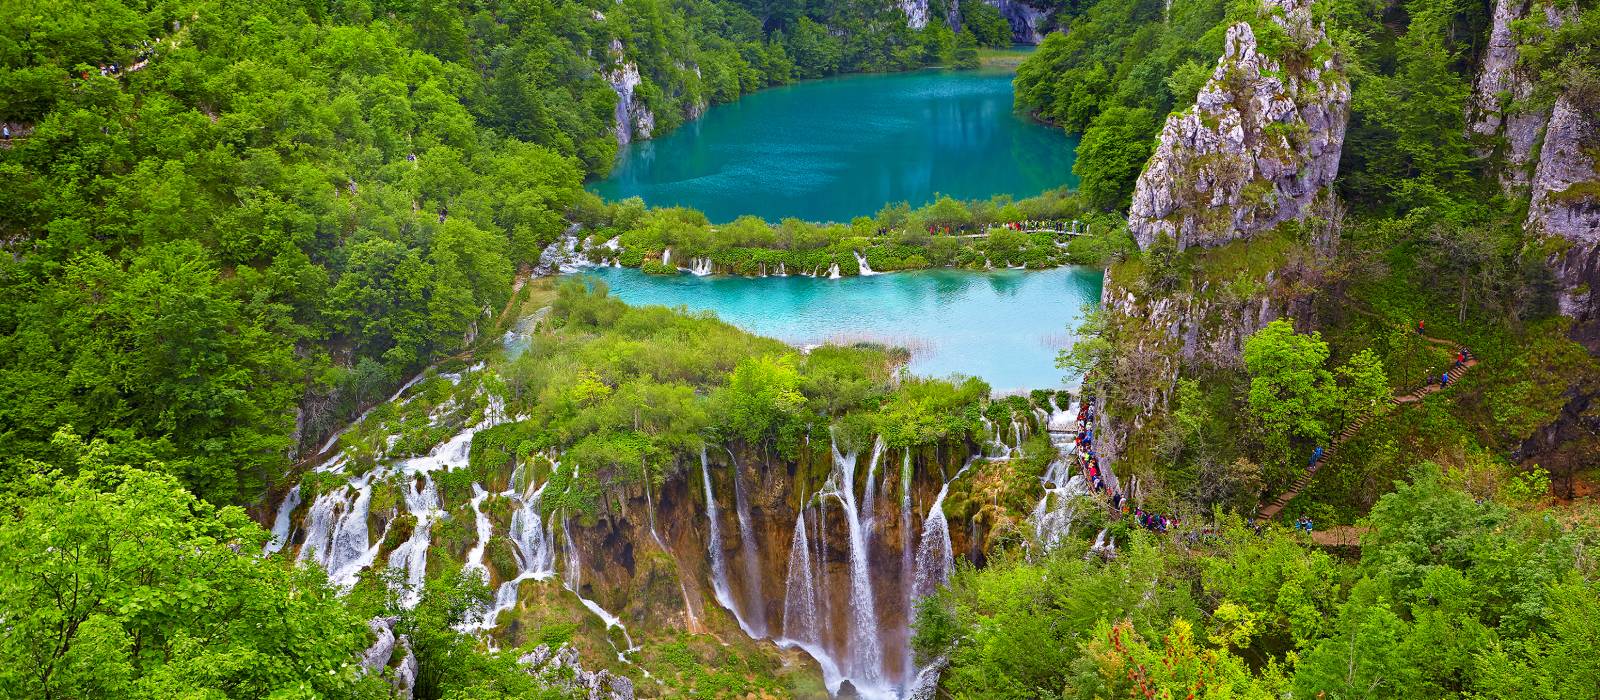 Tips for Destination Plitvice Lakes in Croatia & Slovenia